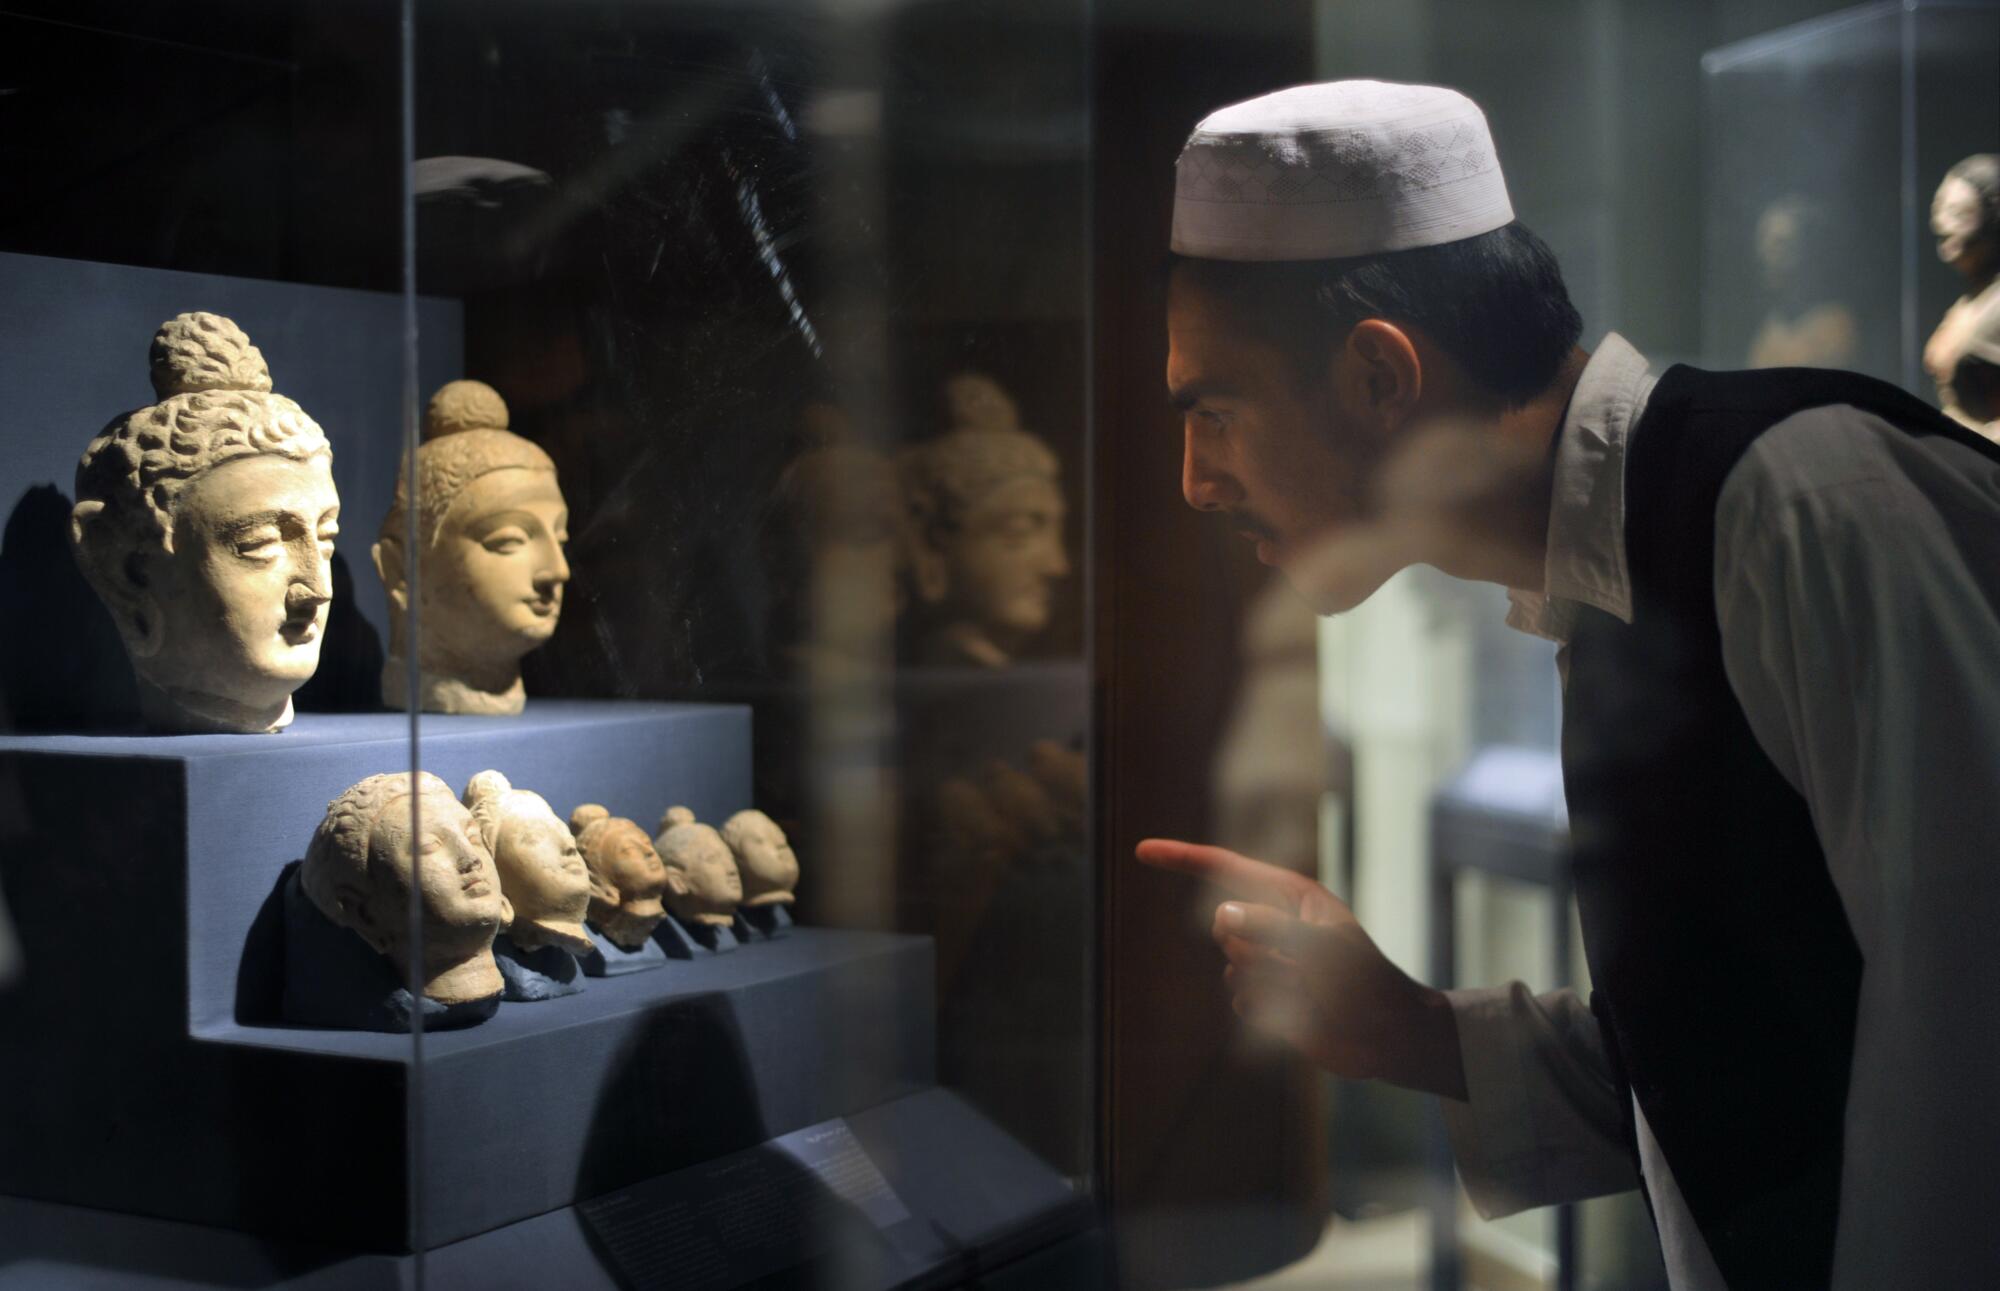 An Afghan student scrutinizes a display of Buddha in a glass vitrine